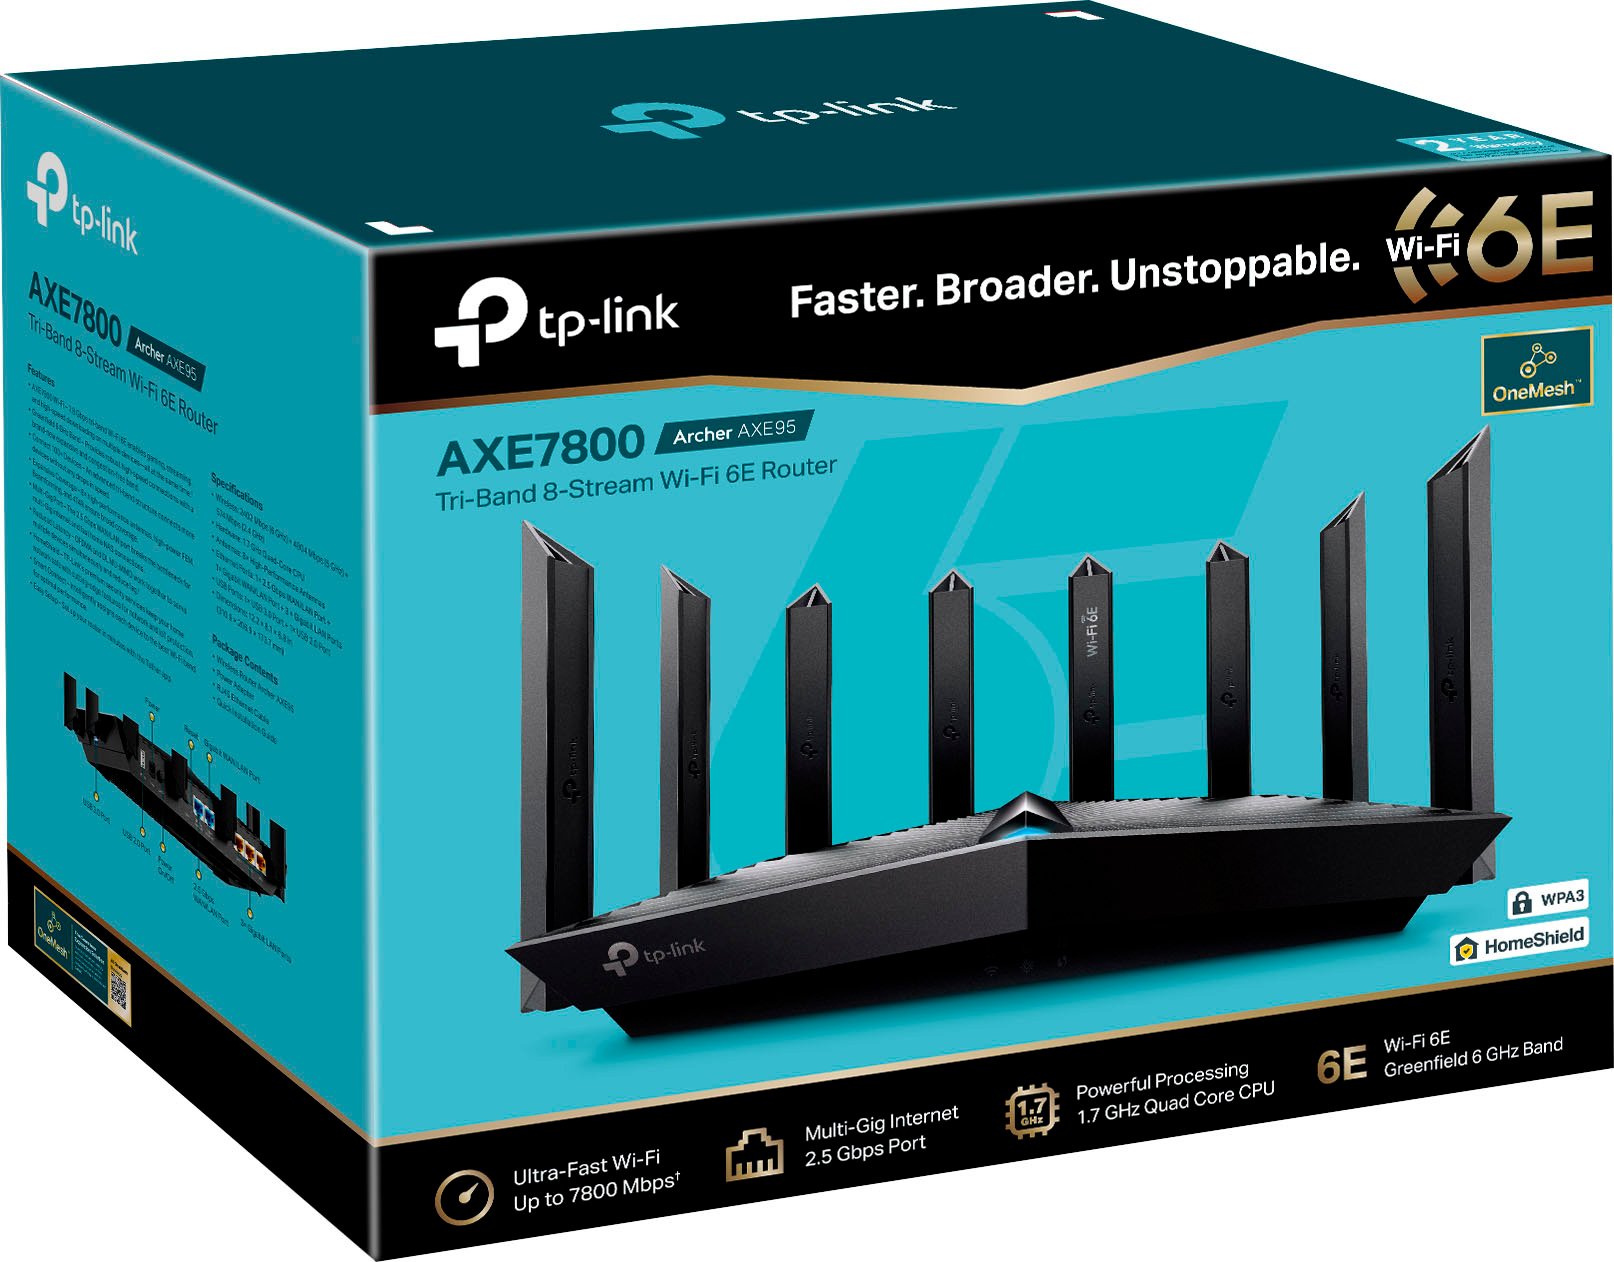 Archer AX206, AX11000 Tri-Band 10G WiFi 6E Router